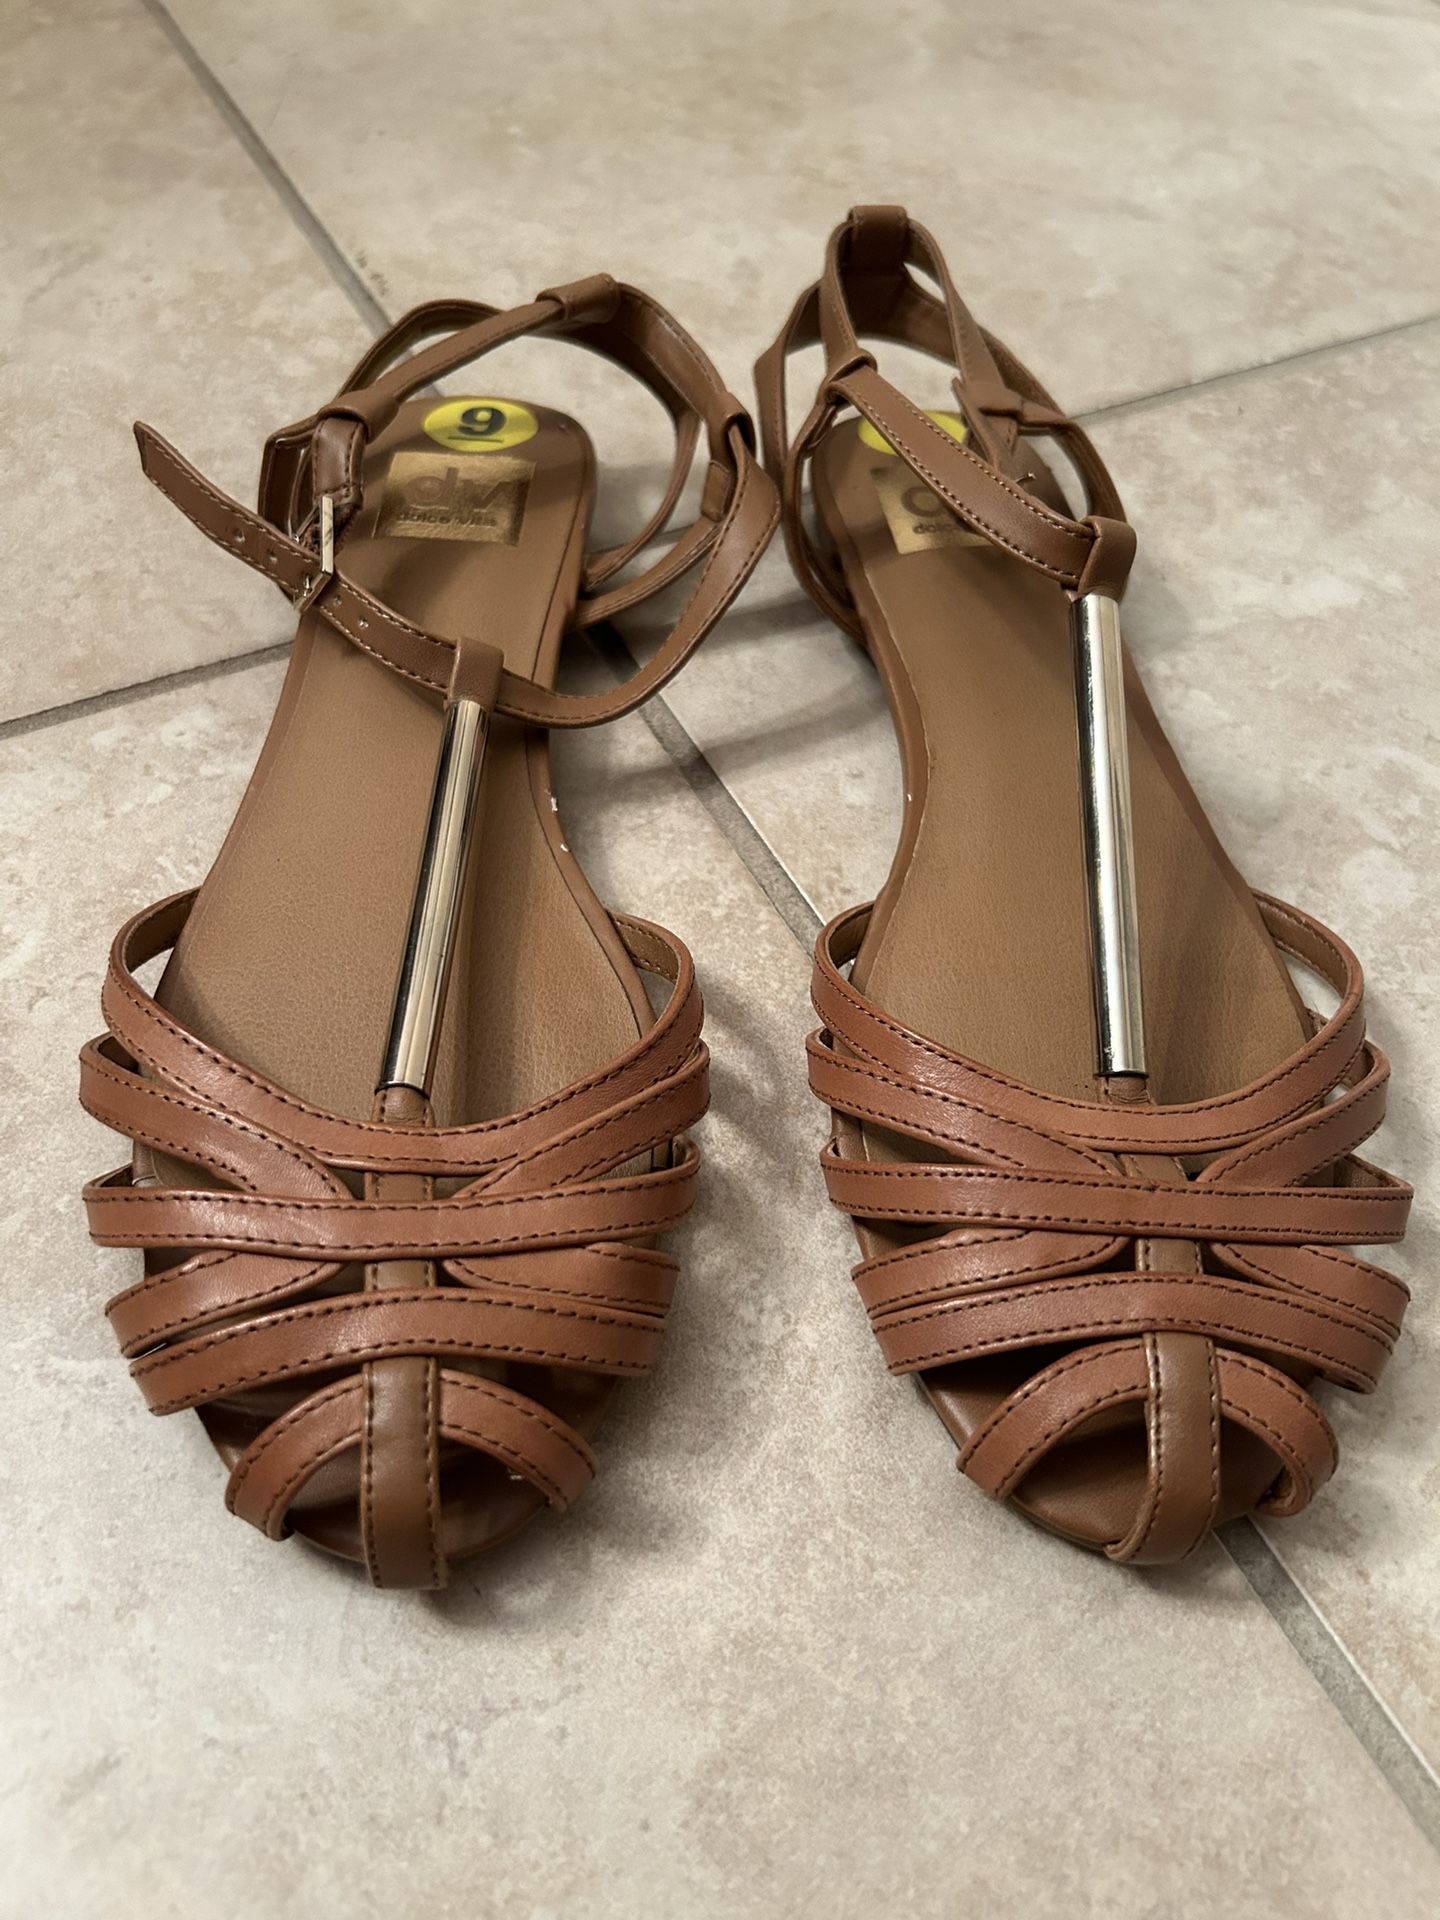 Women’s Dolce Vita sandals. Size 9. NWT. 